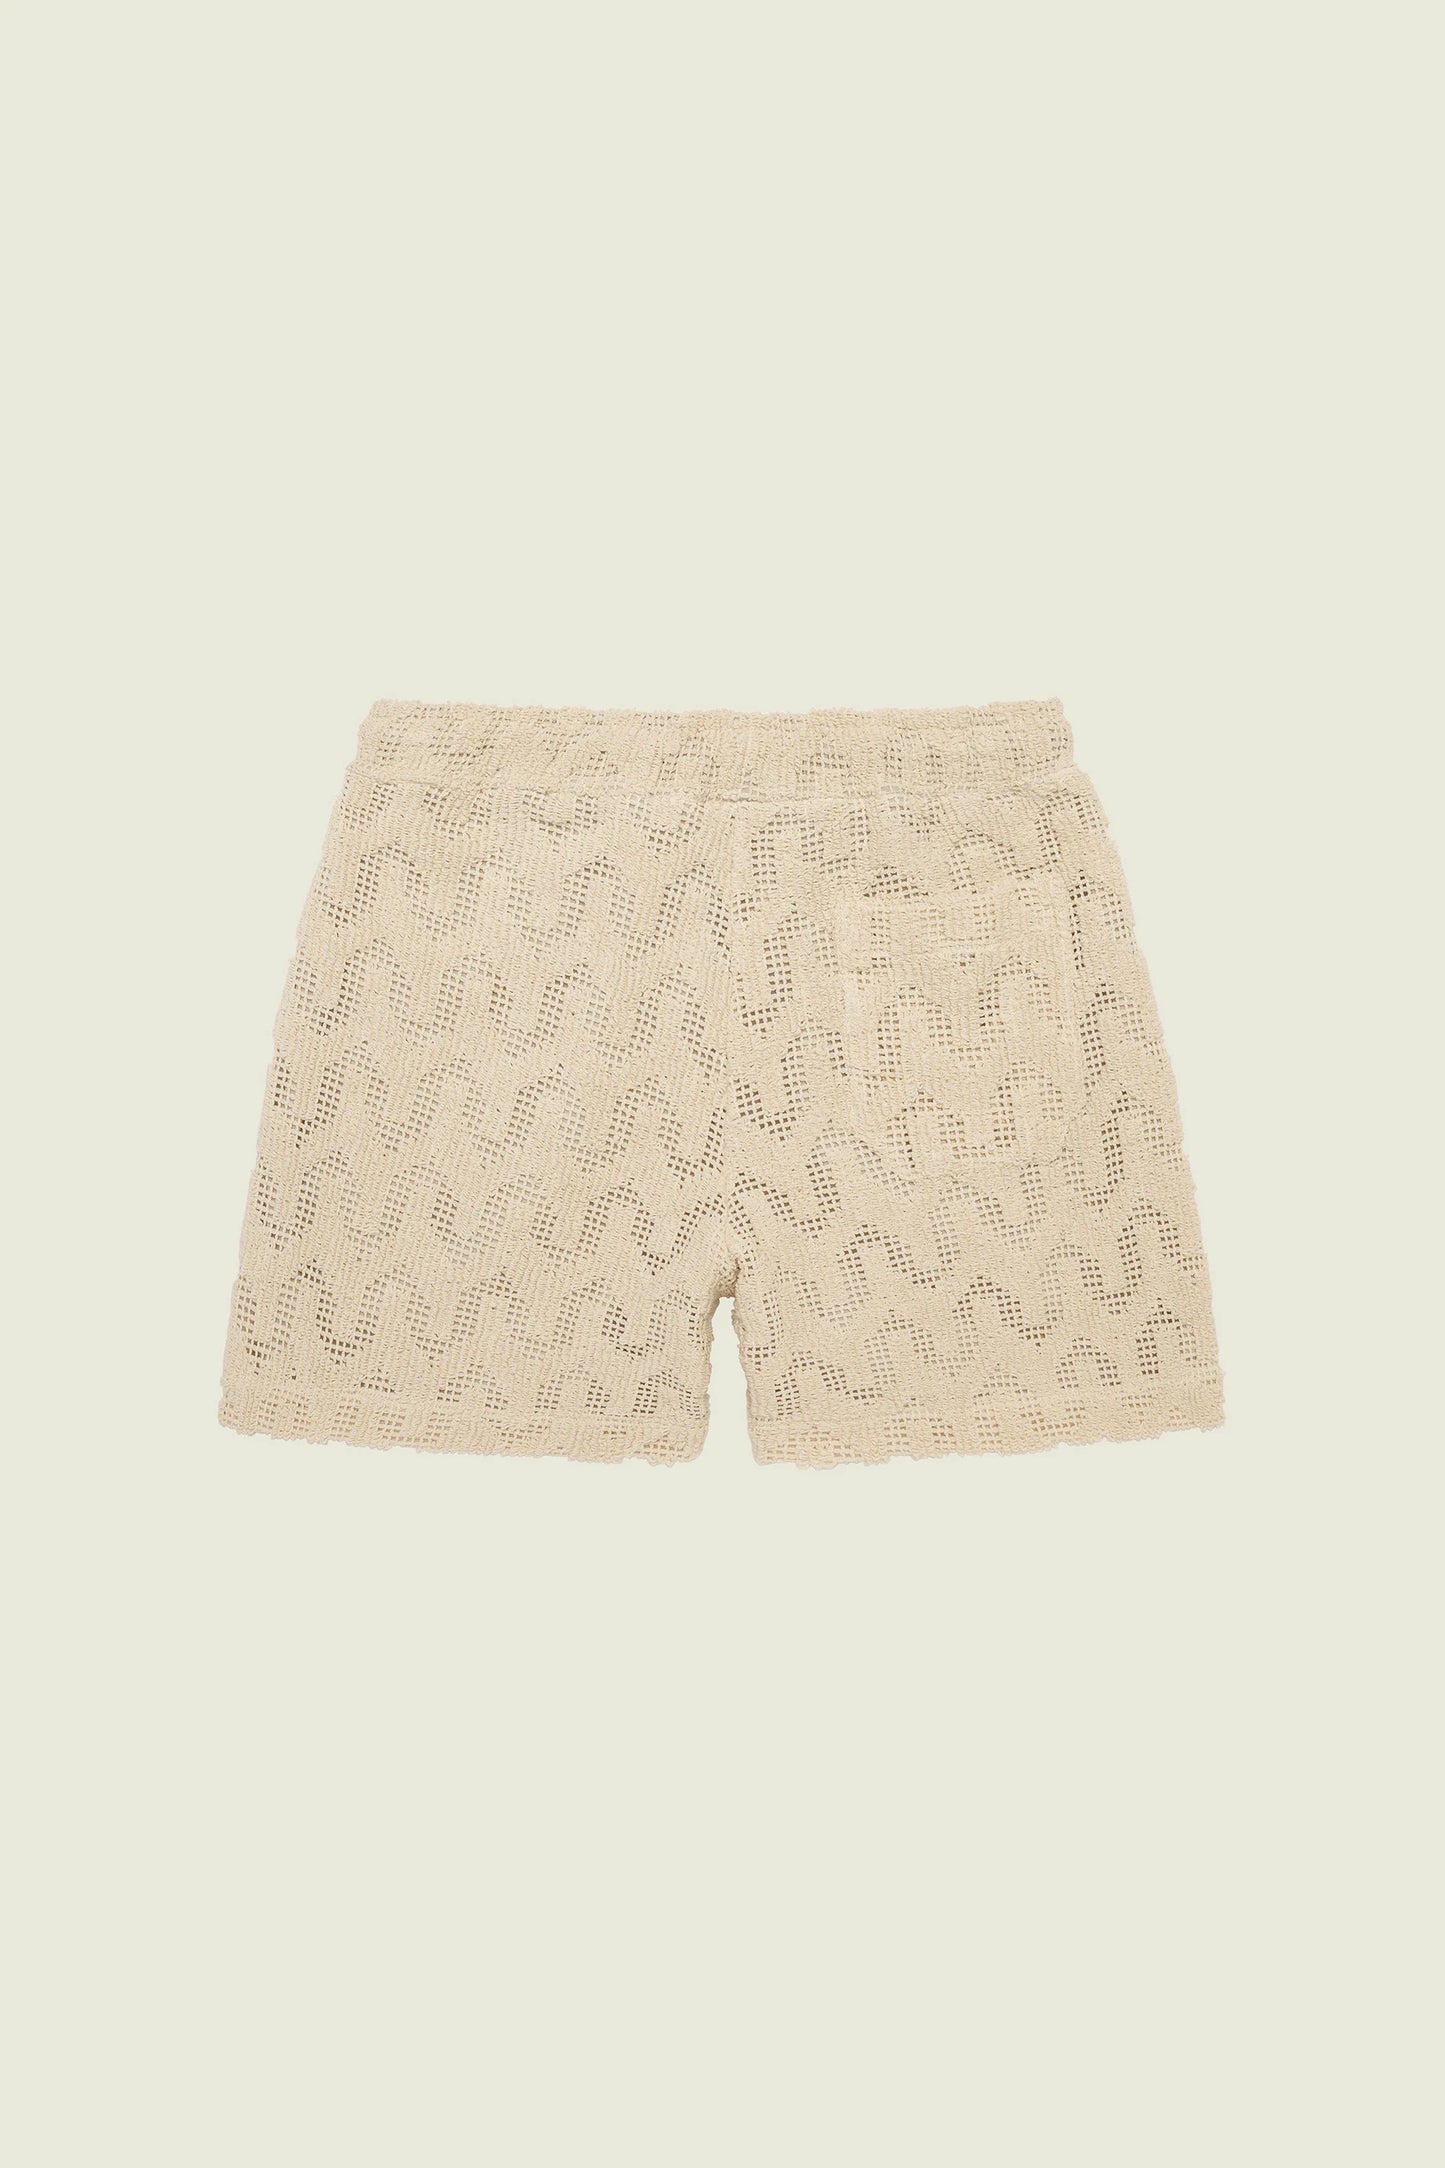 The Atlas Crochet shorts